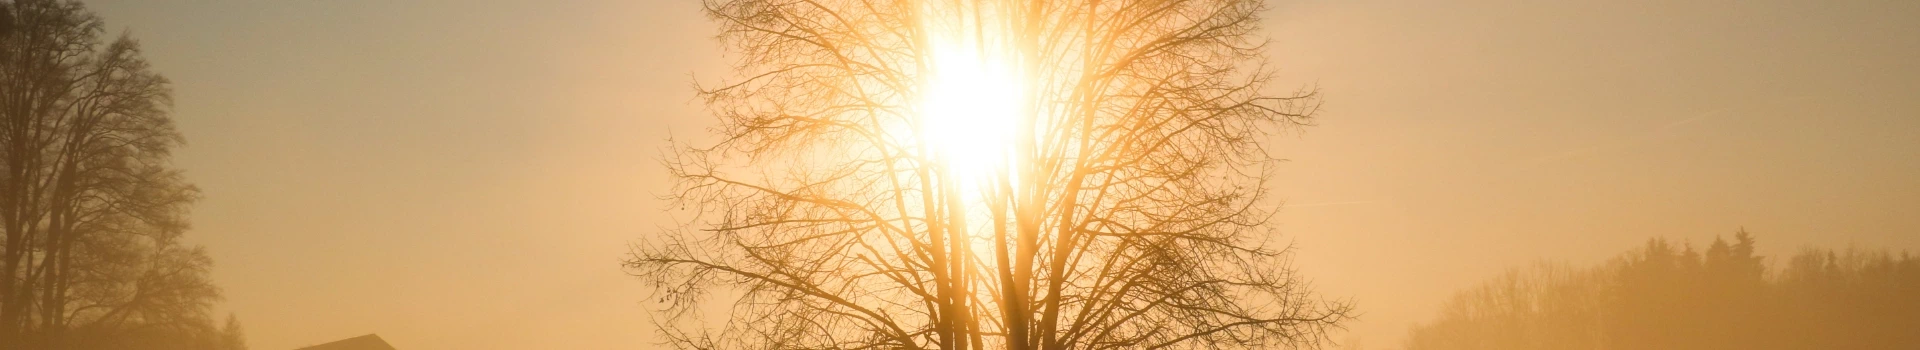 banner - wschód słońca na tle drzewa